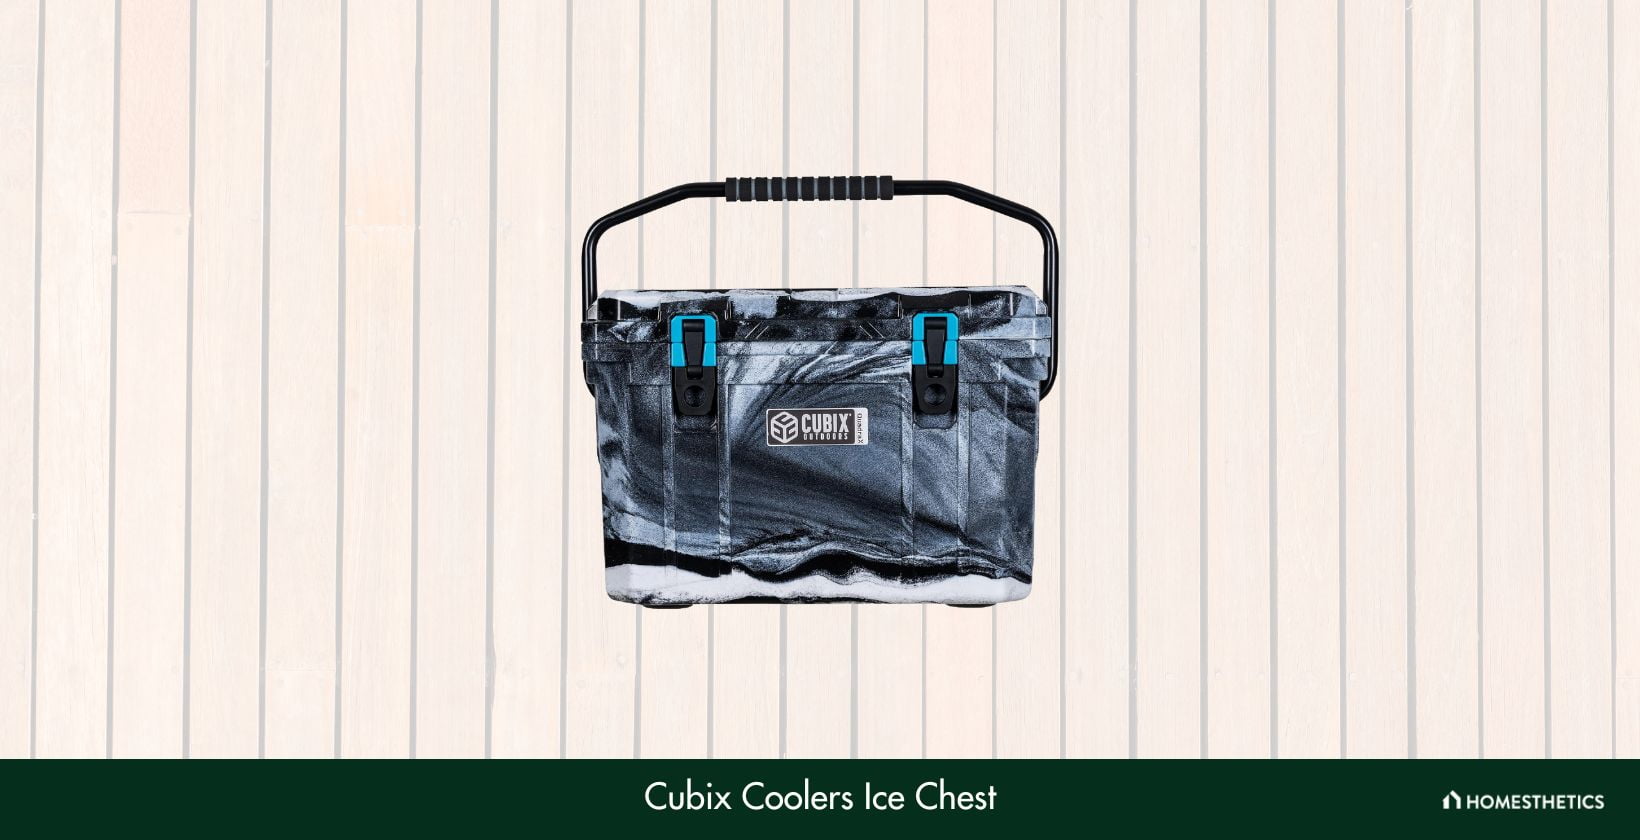 Cubix Coolers Ice Chest